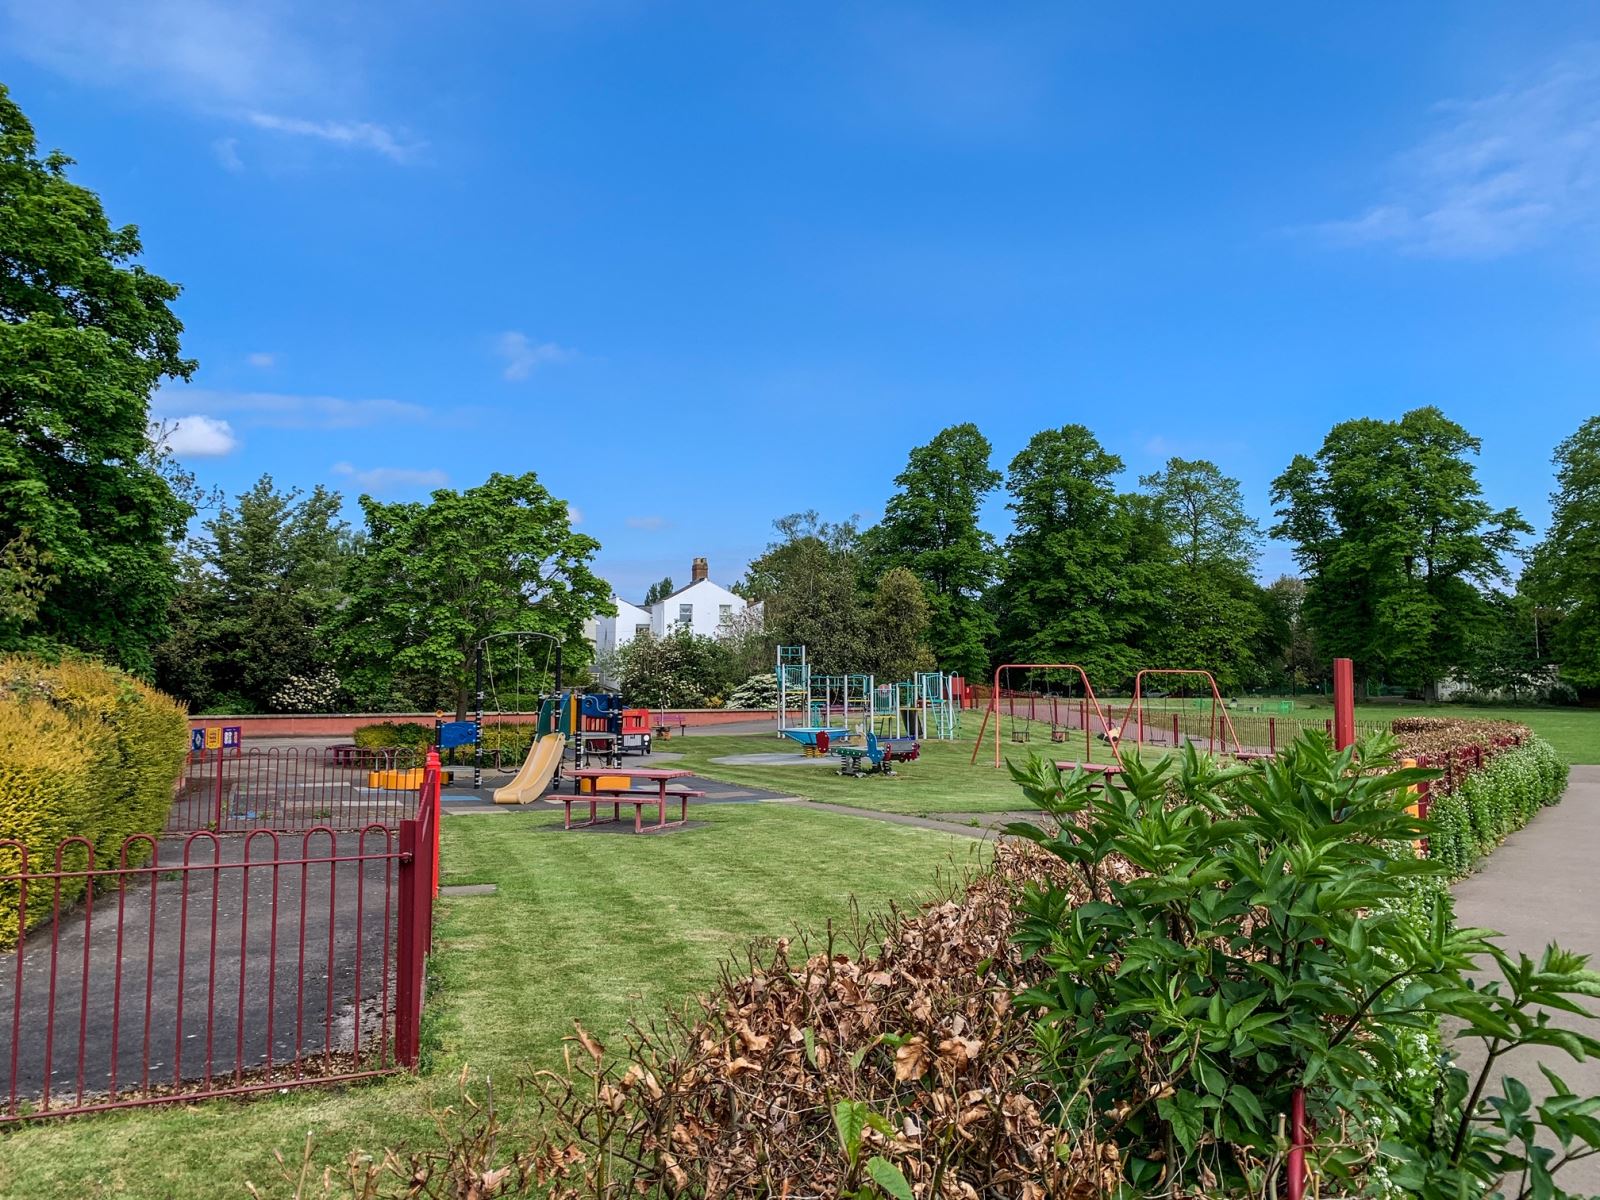 Sandford Park playground